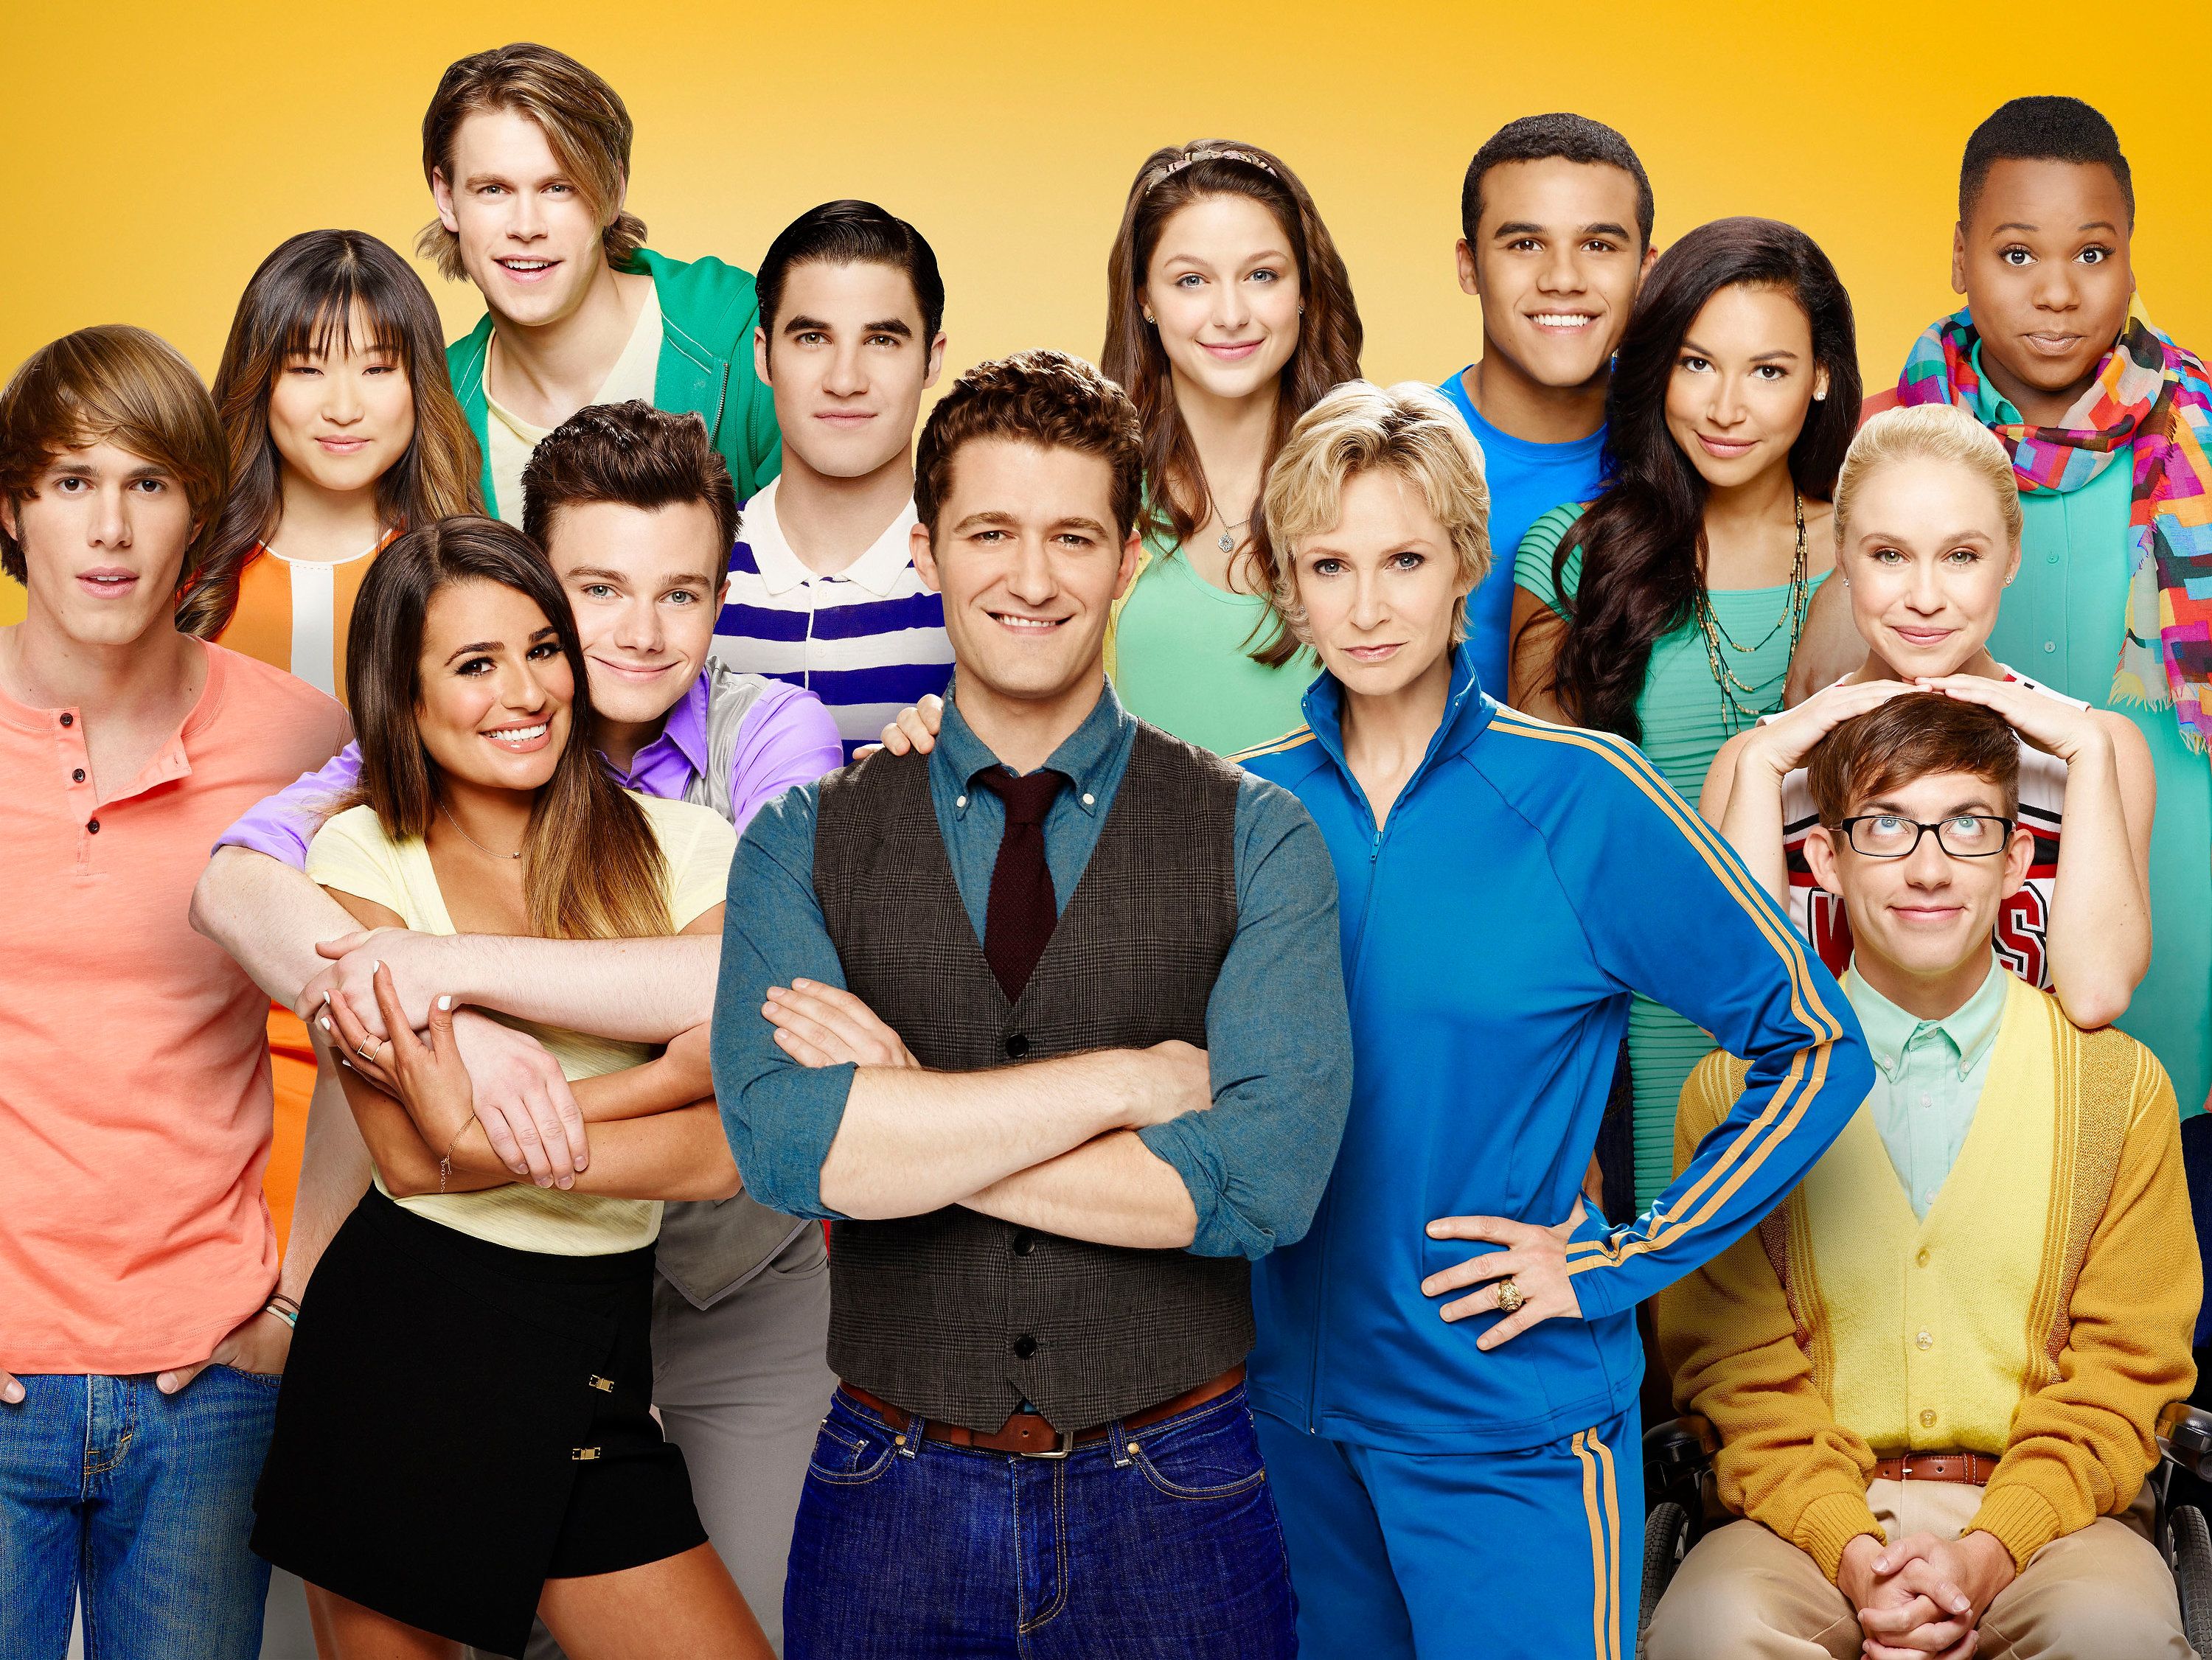 Studio portrait of "Glee" cast members | Source: Getty Images